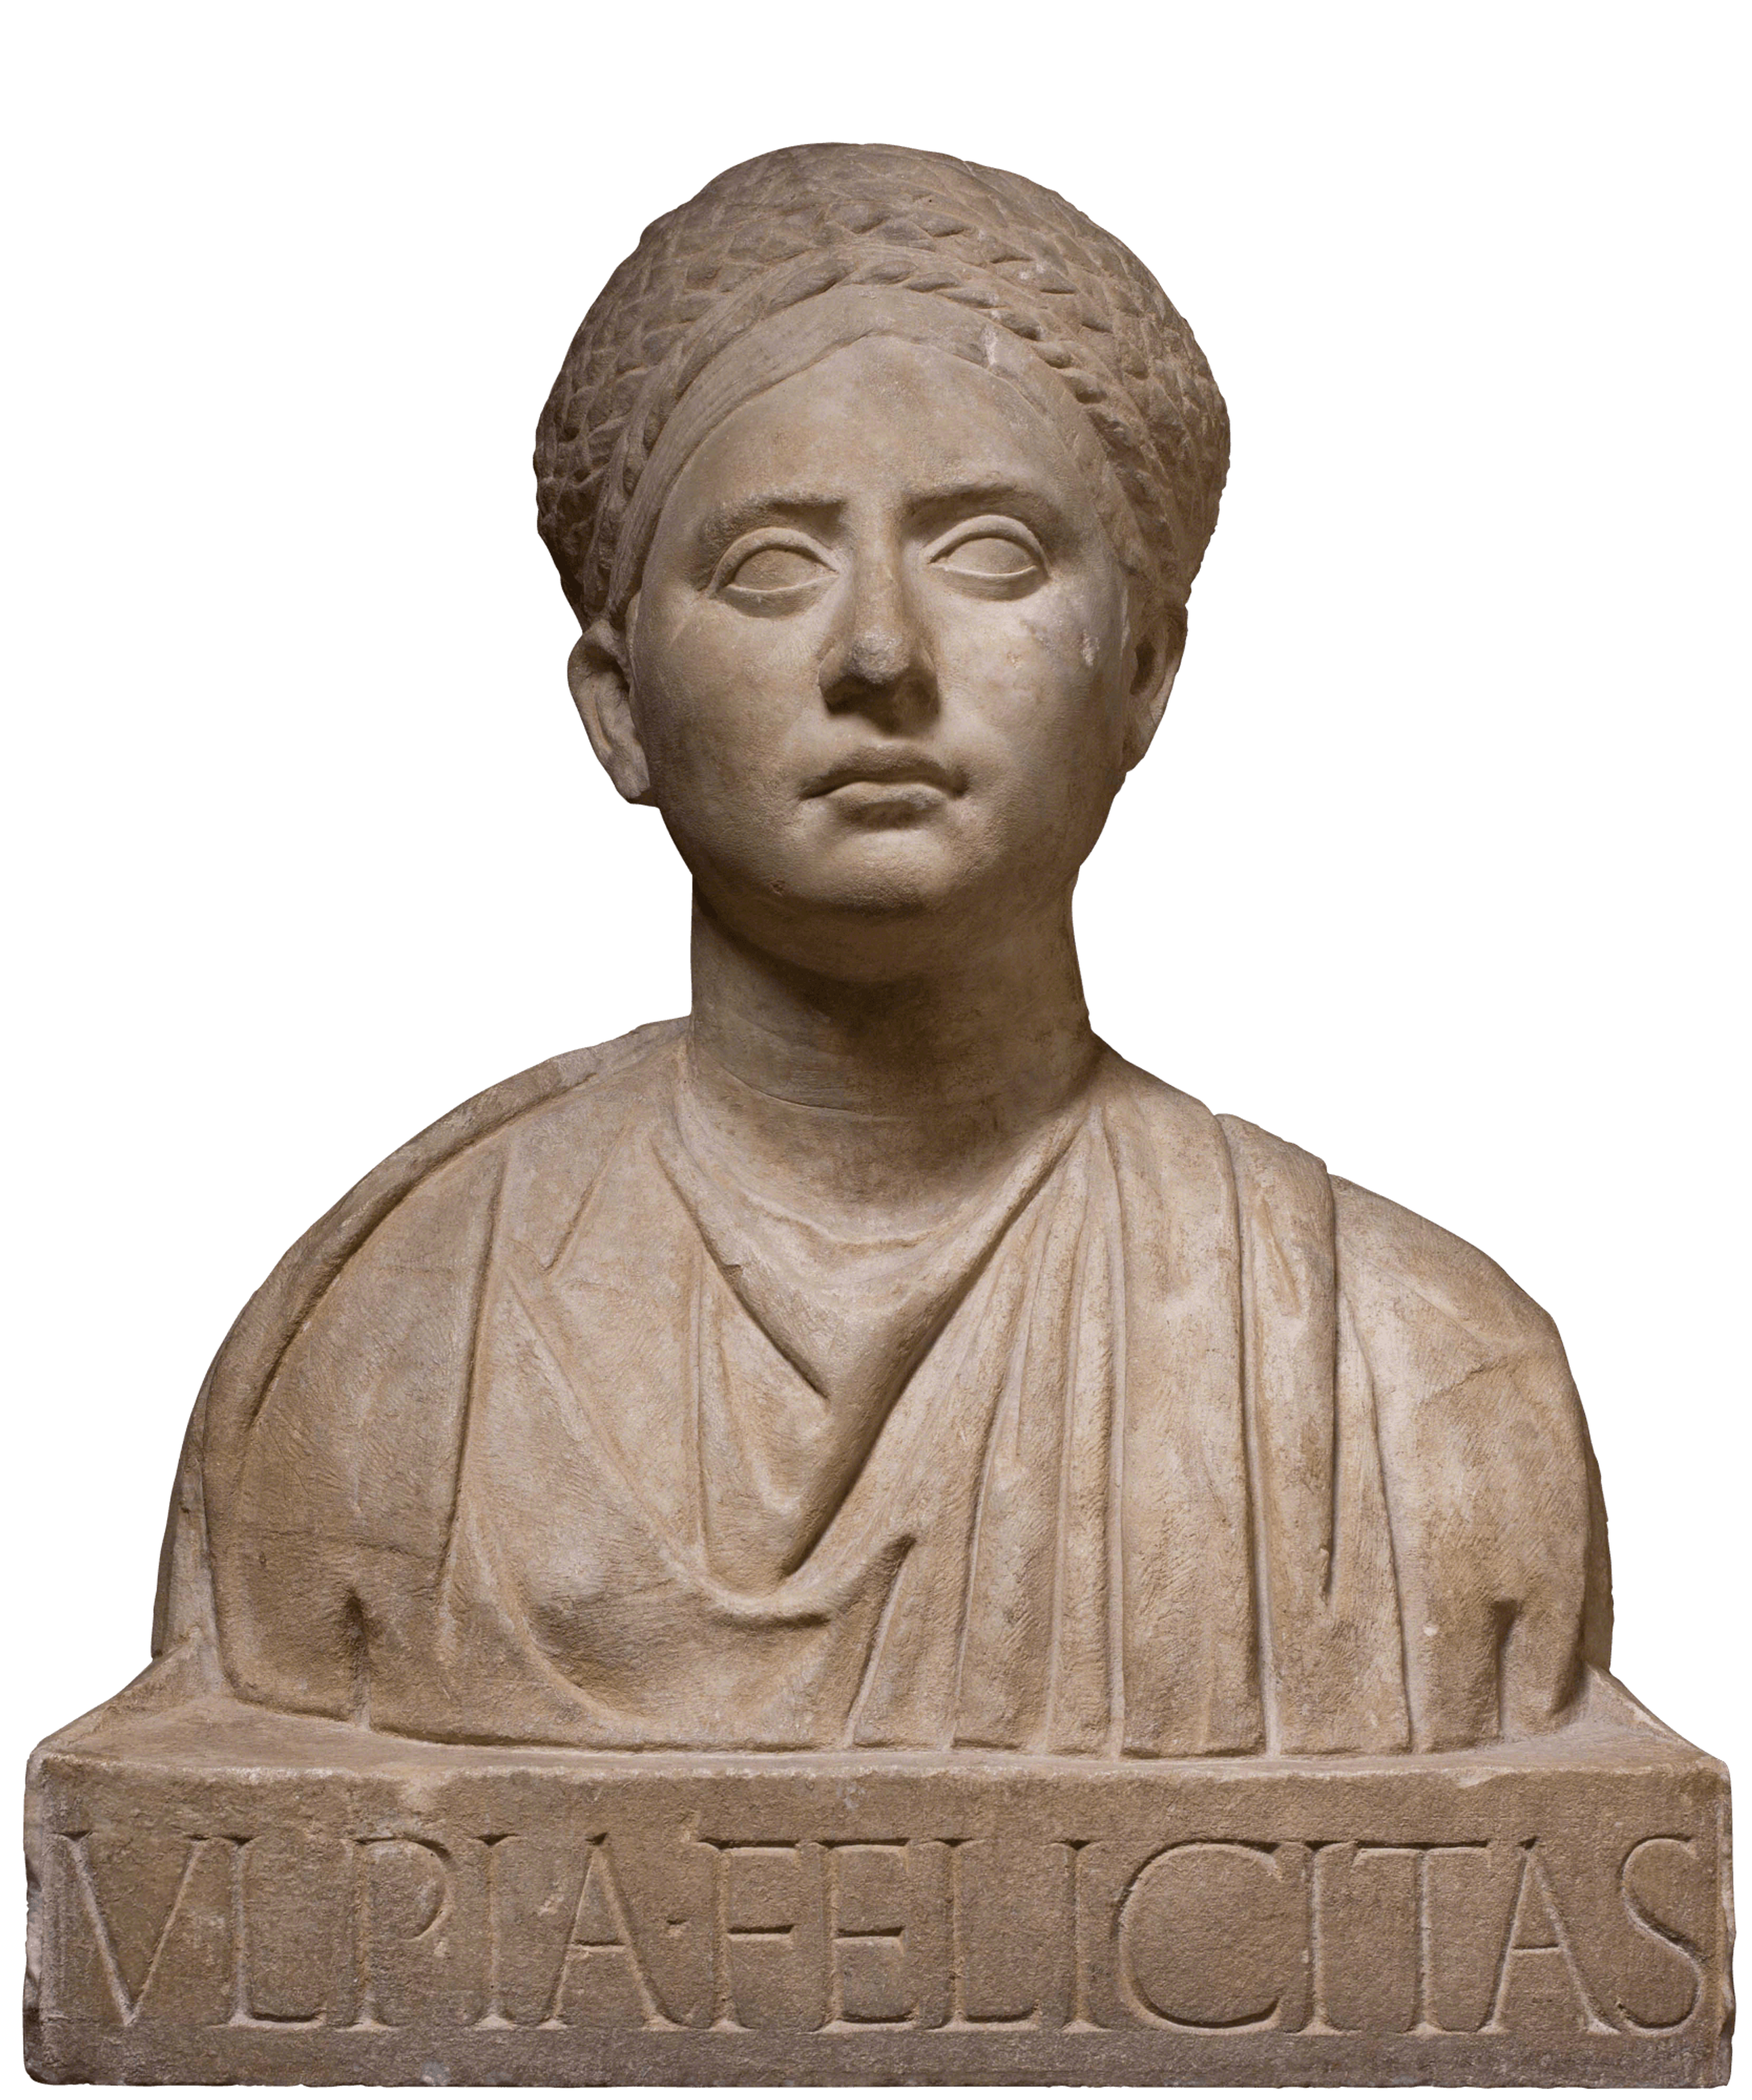 Alto rilievo con busto di Ulpia Felicitas